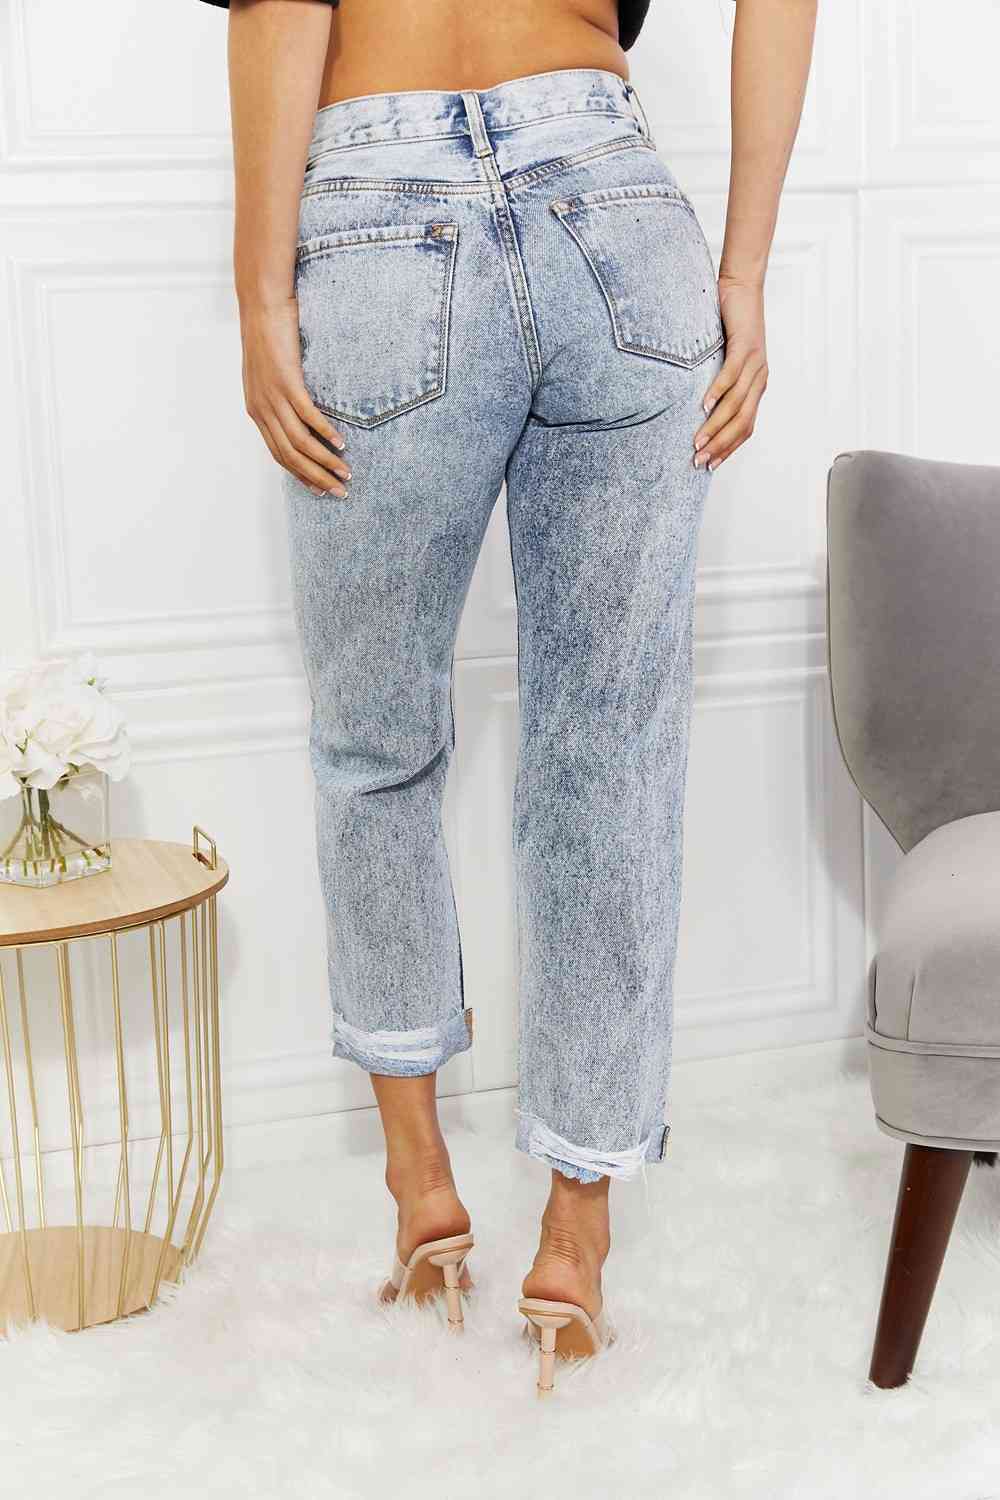 TEEK - K. Kendra High Rise Distressed Straight Jeans JEANS TEEK Trend   